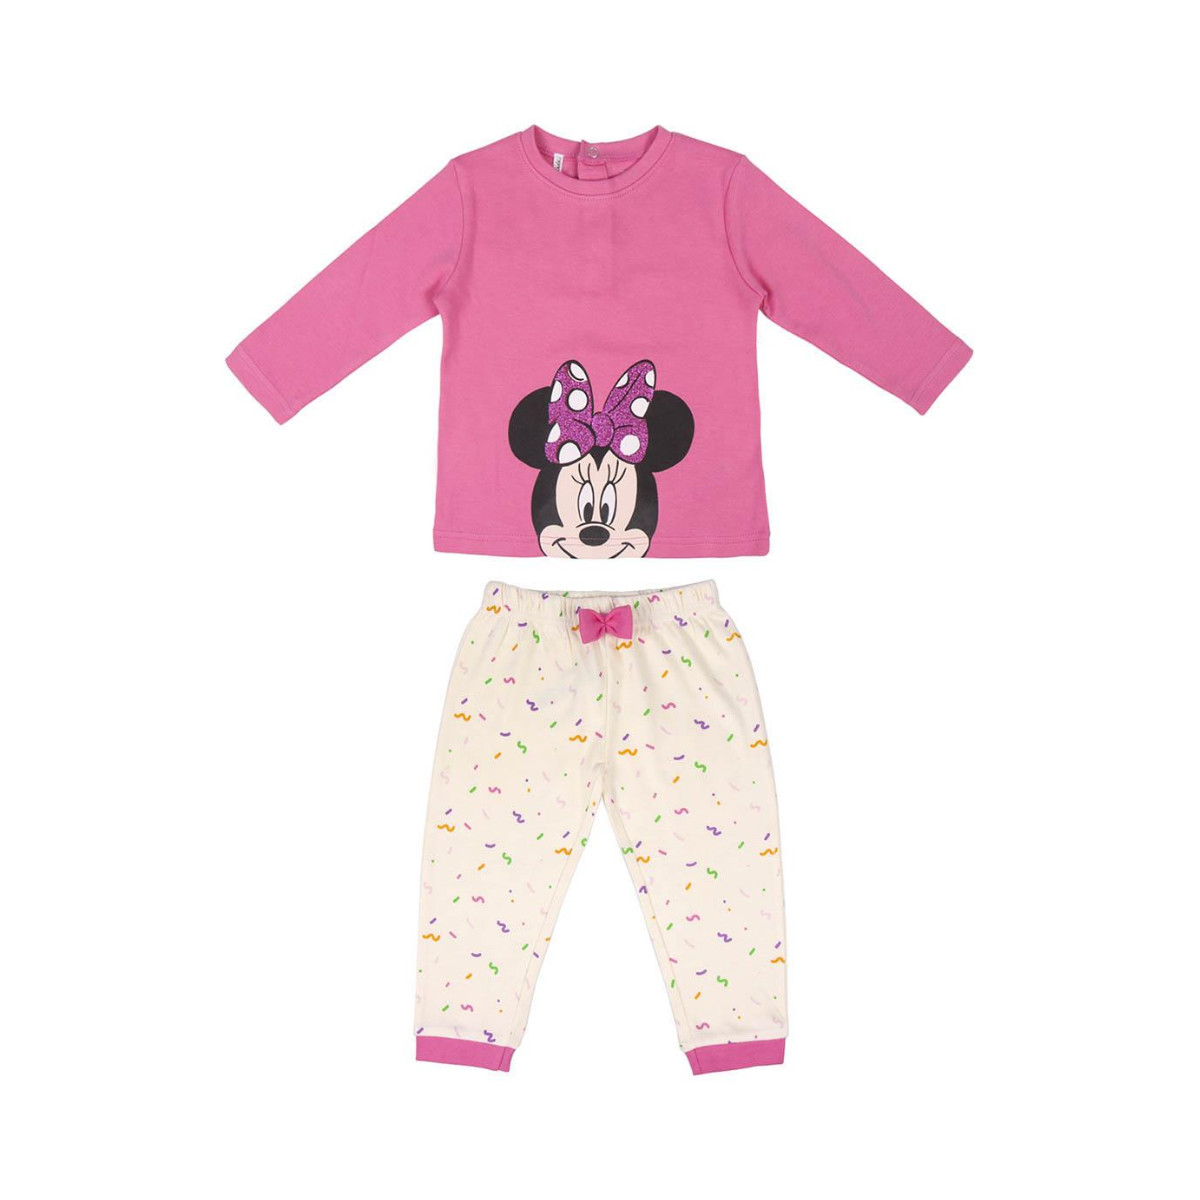 textil Niños Pijama Disney 2200006155 Rosa